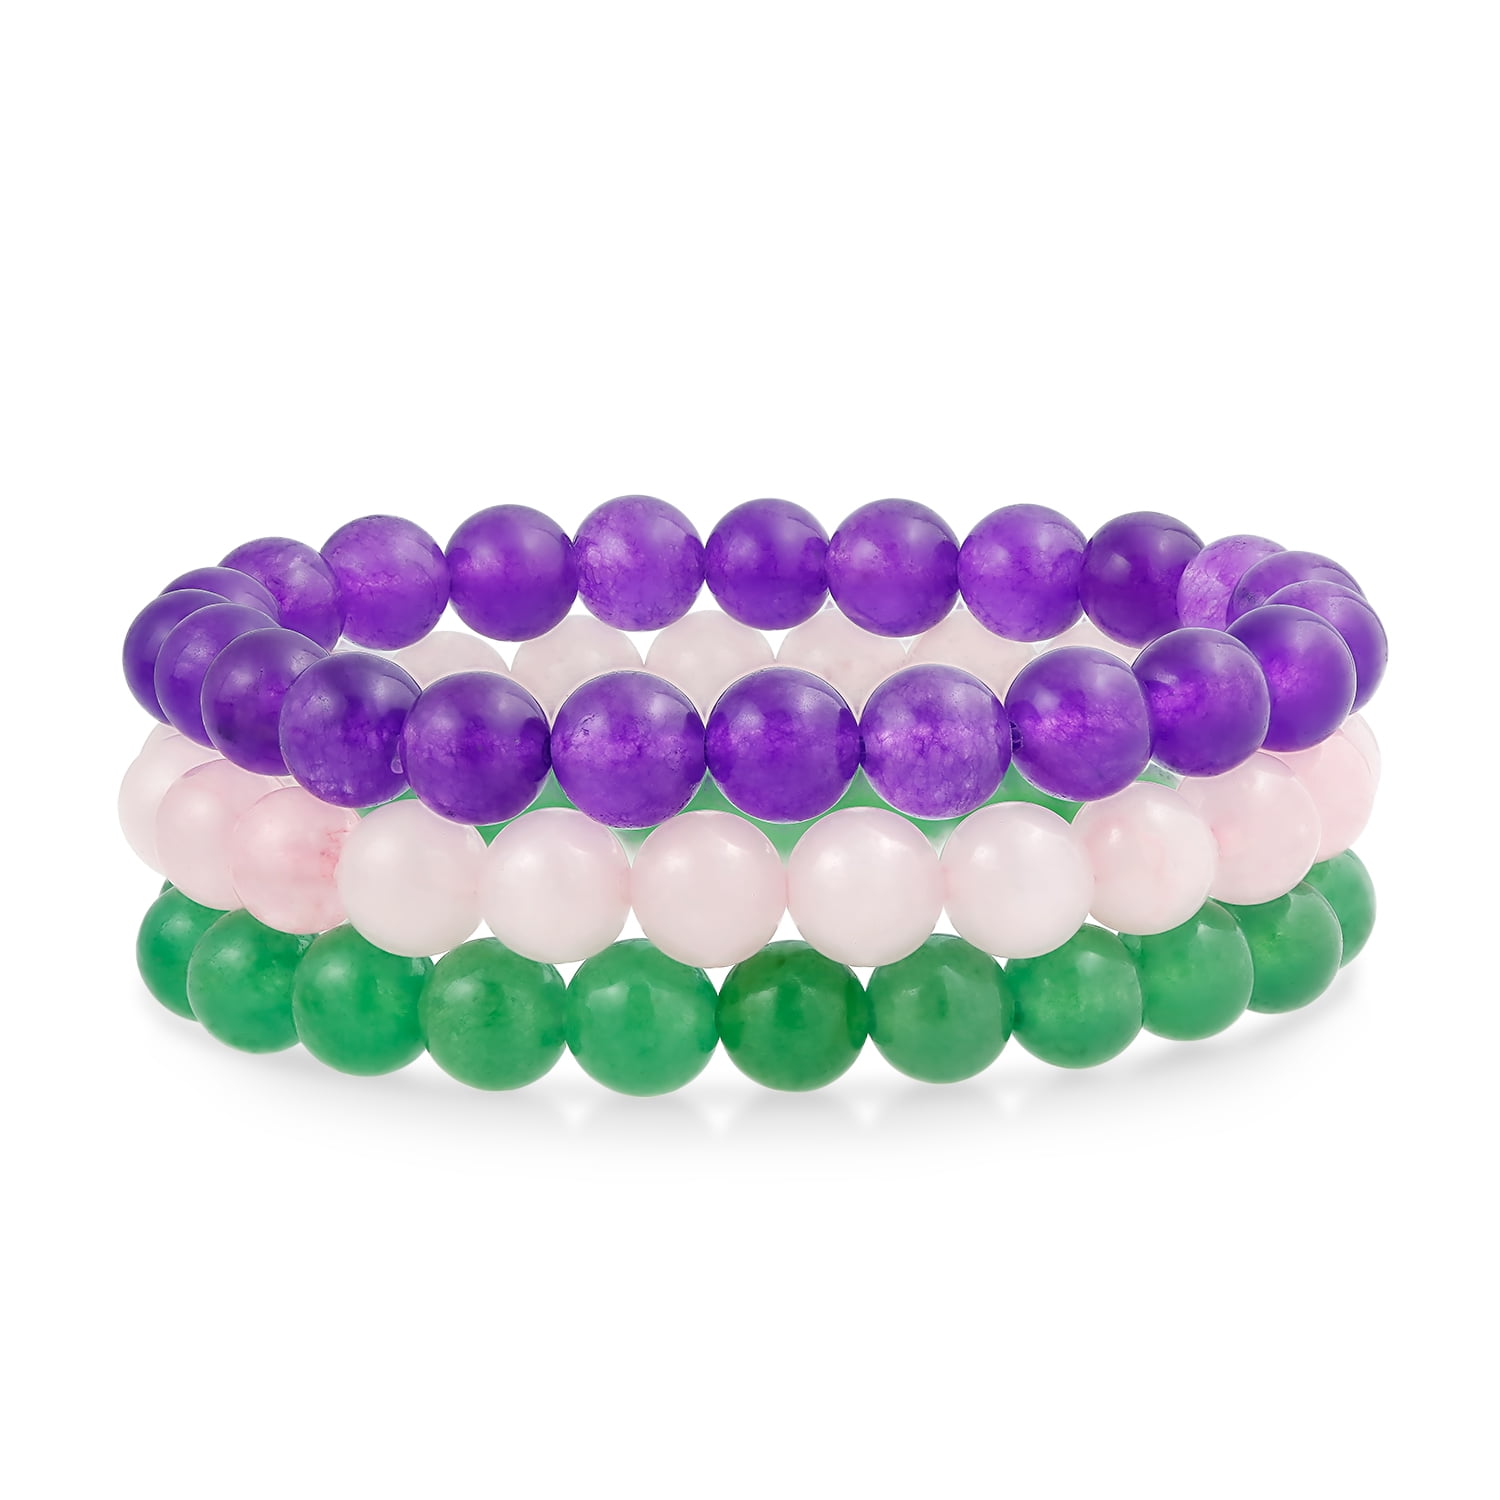 4in Metallic Purple/ Green/ Gold Plastic Jumbo Rings/Bracelet